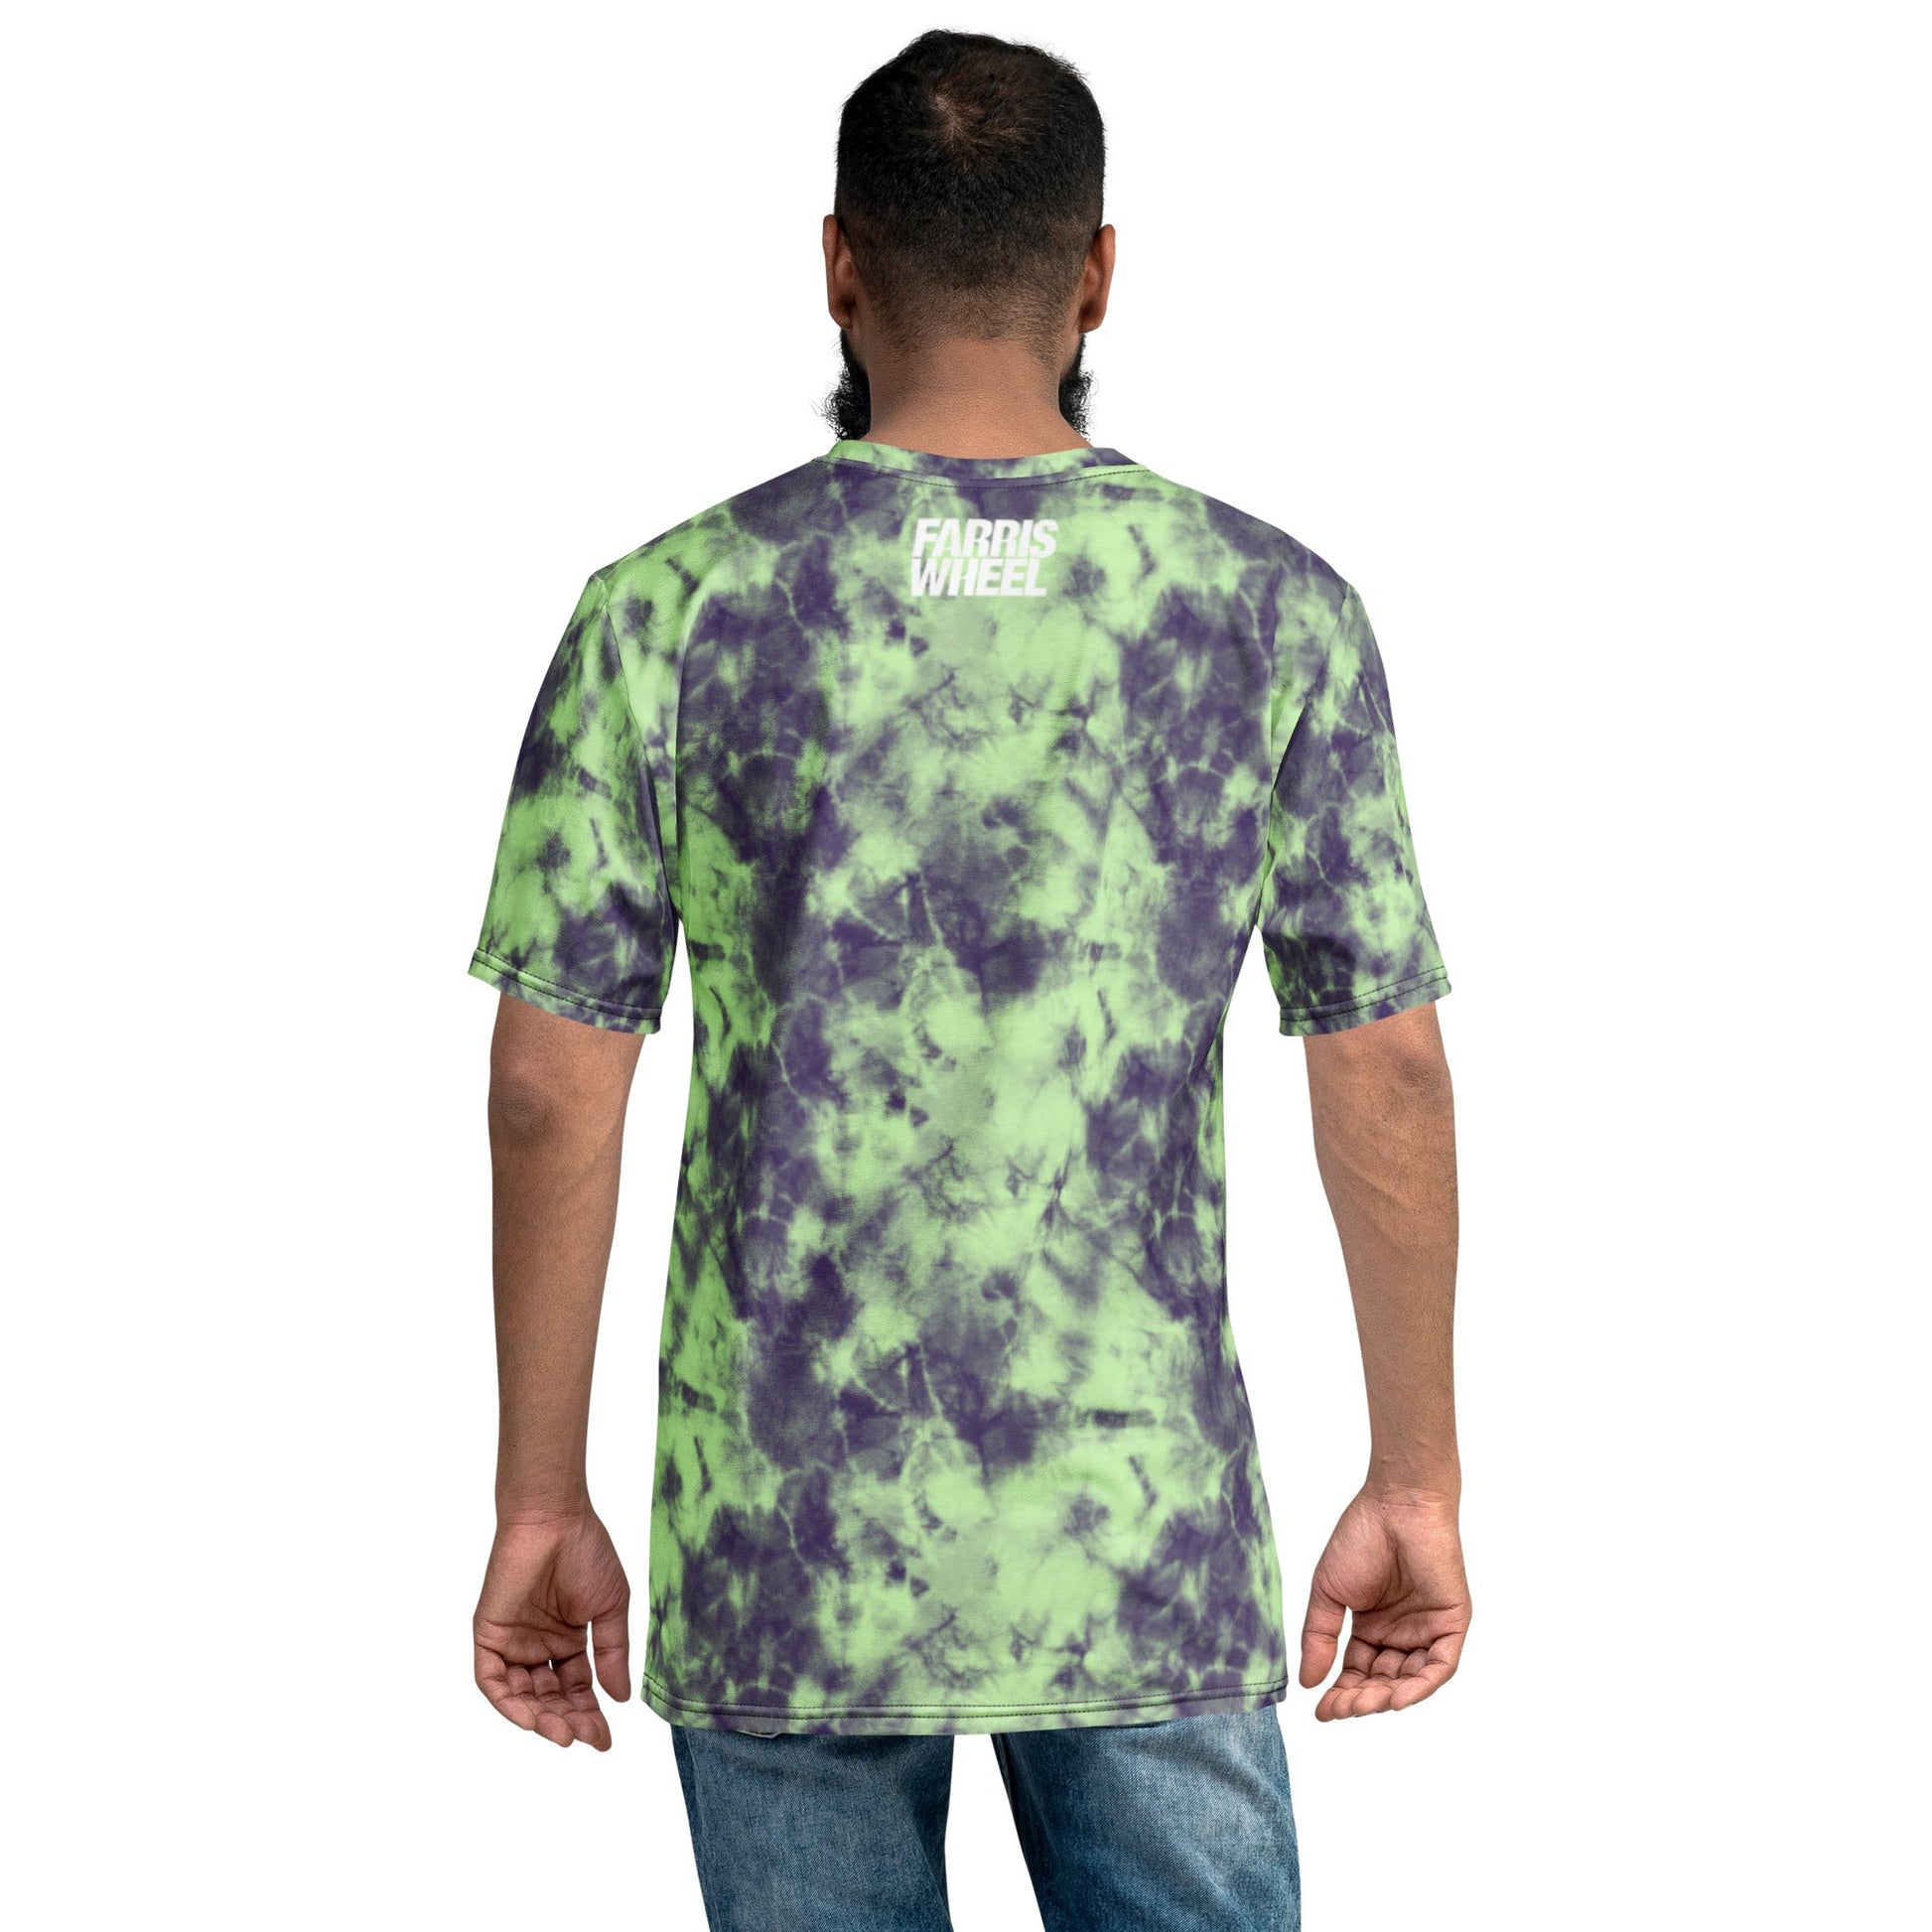 Farris Wheel Tie-Dye Men's T-shirt (Marble) - BeExtra! Apparel & More